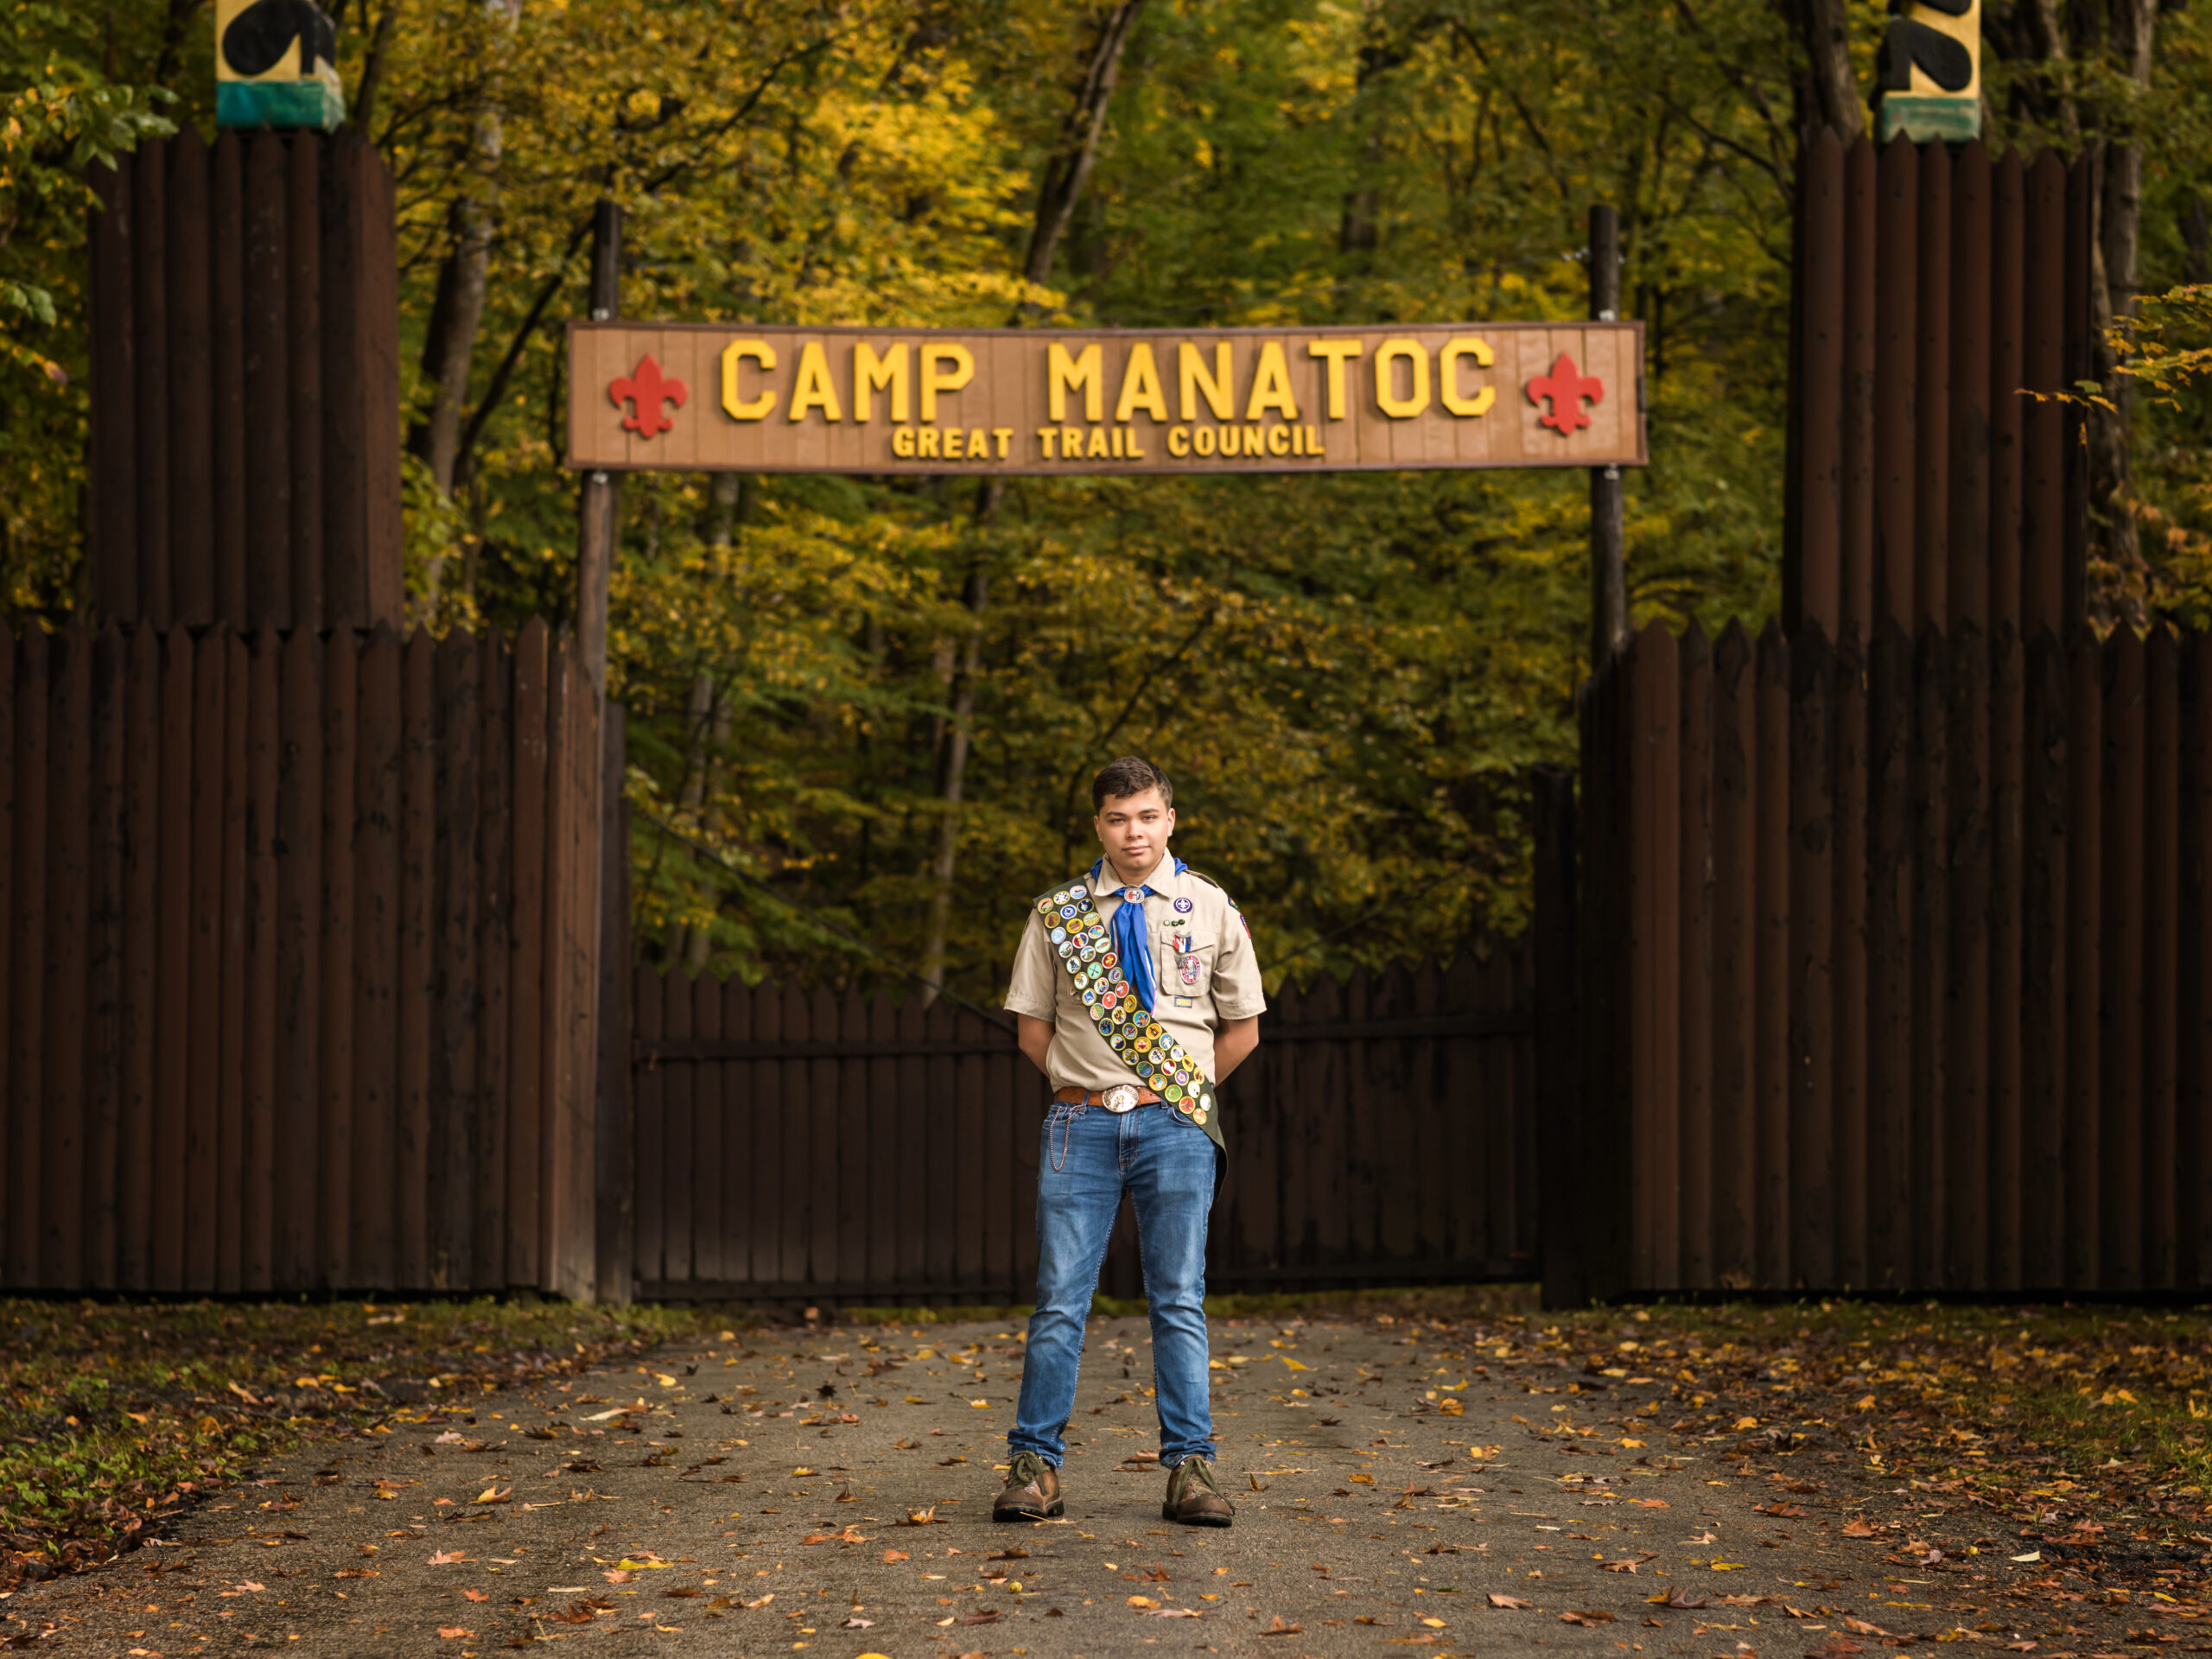 senior boy with boyscout uniform on standing at camp manatoc entrance